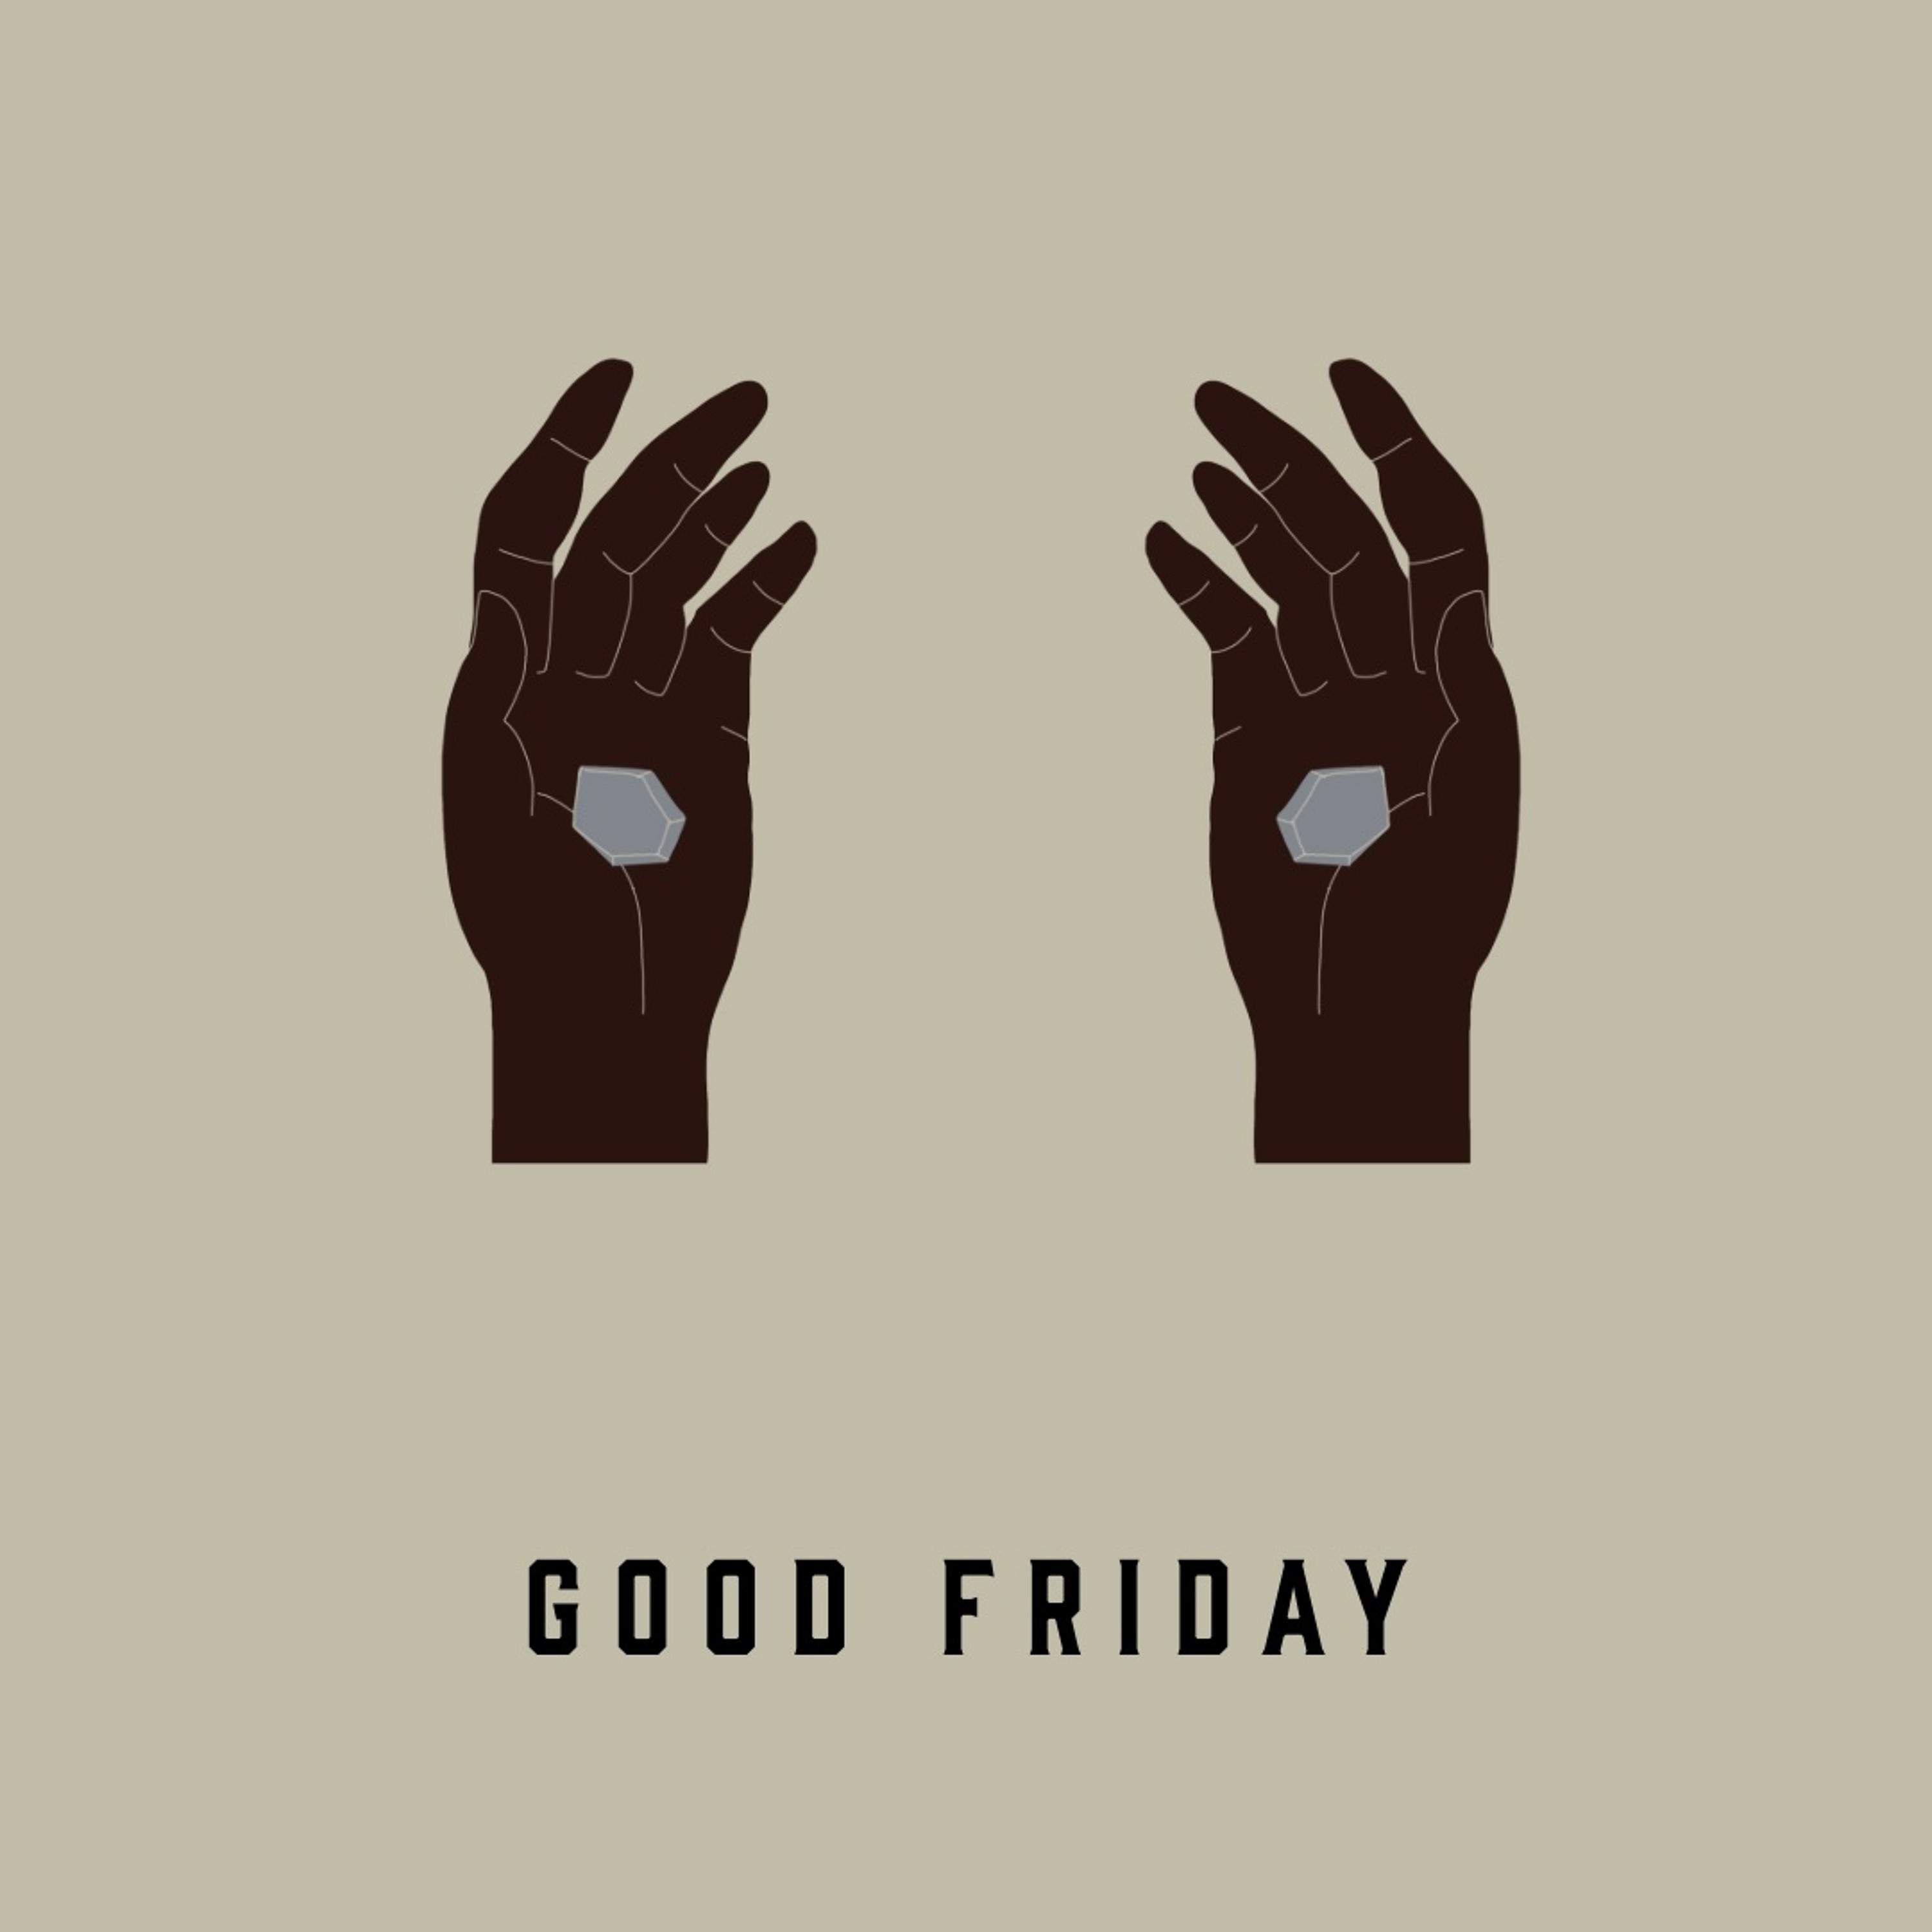 Good Friday: Abandoned by God